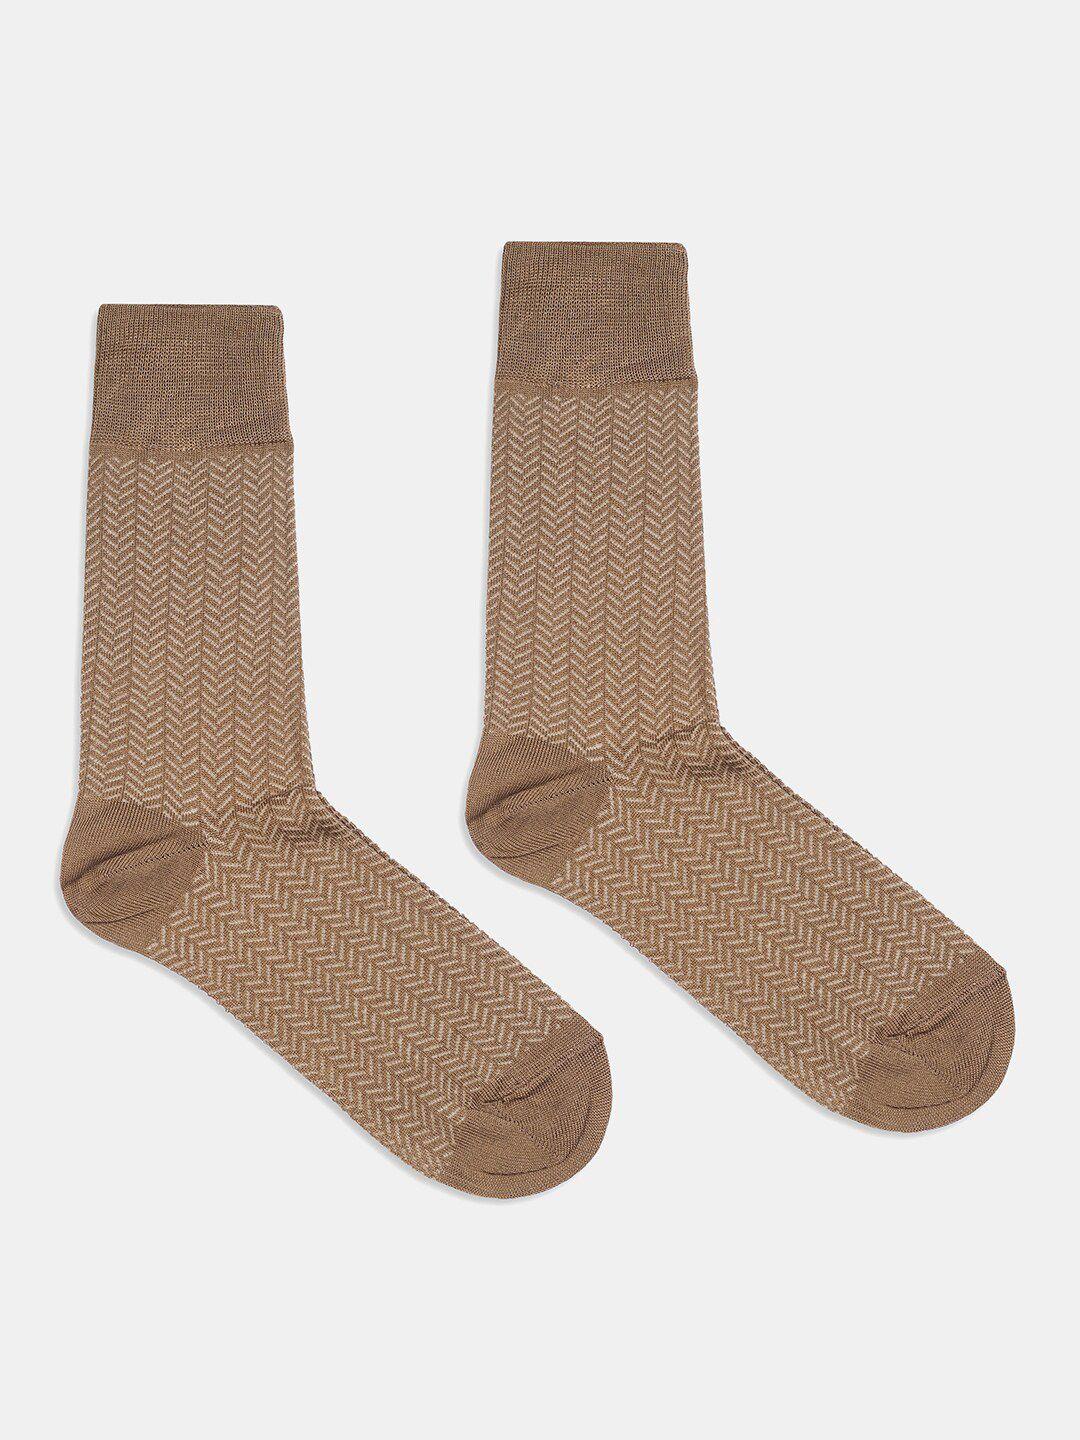 blackberrys-men-patterned-pure-cotton-calf-length-socks